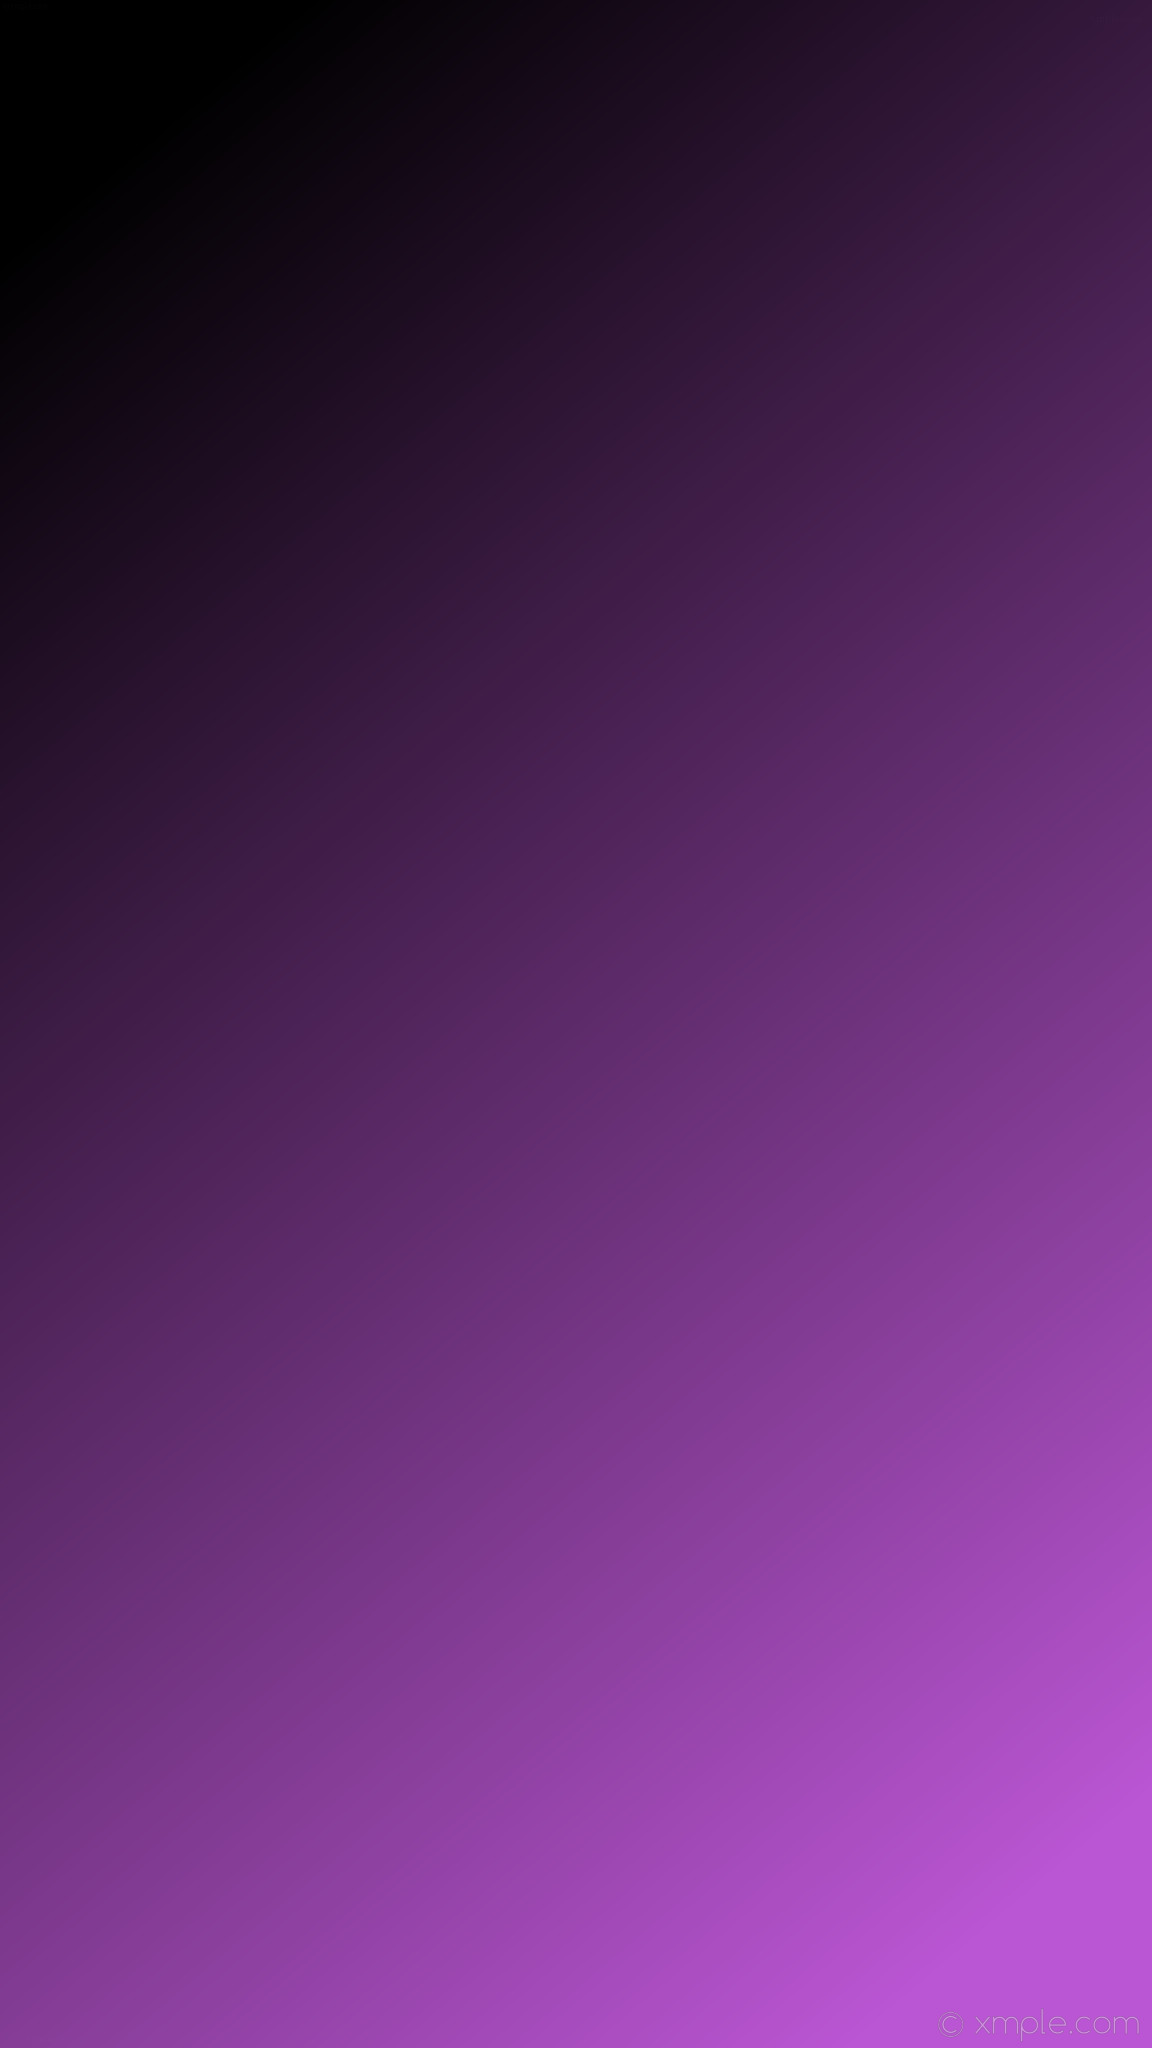 1152x2048 wallpaper black purple gradient linear medium orchid #ba55d3 #000000 285Â°